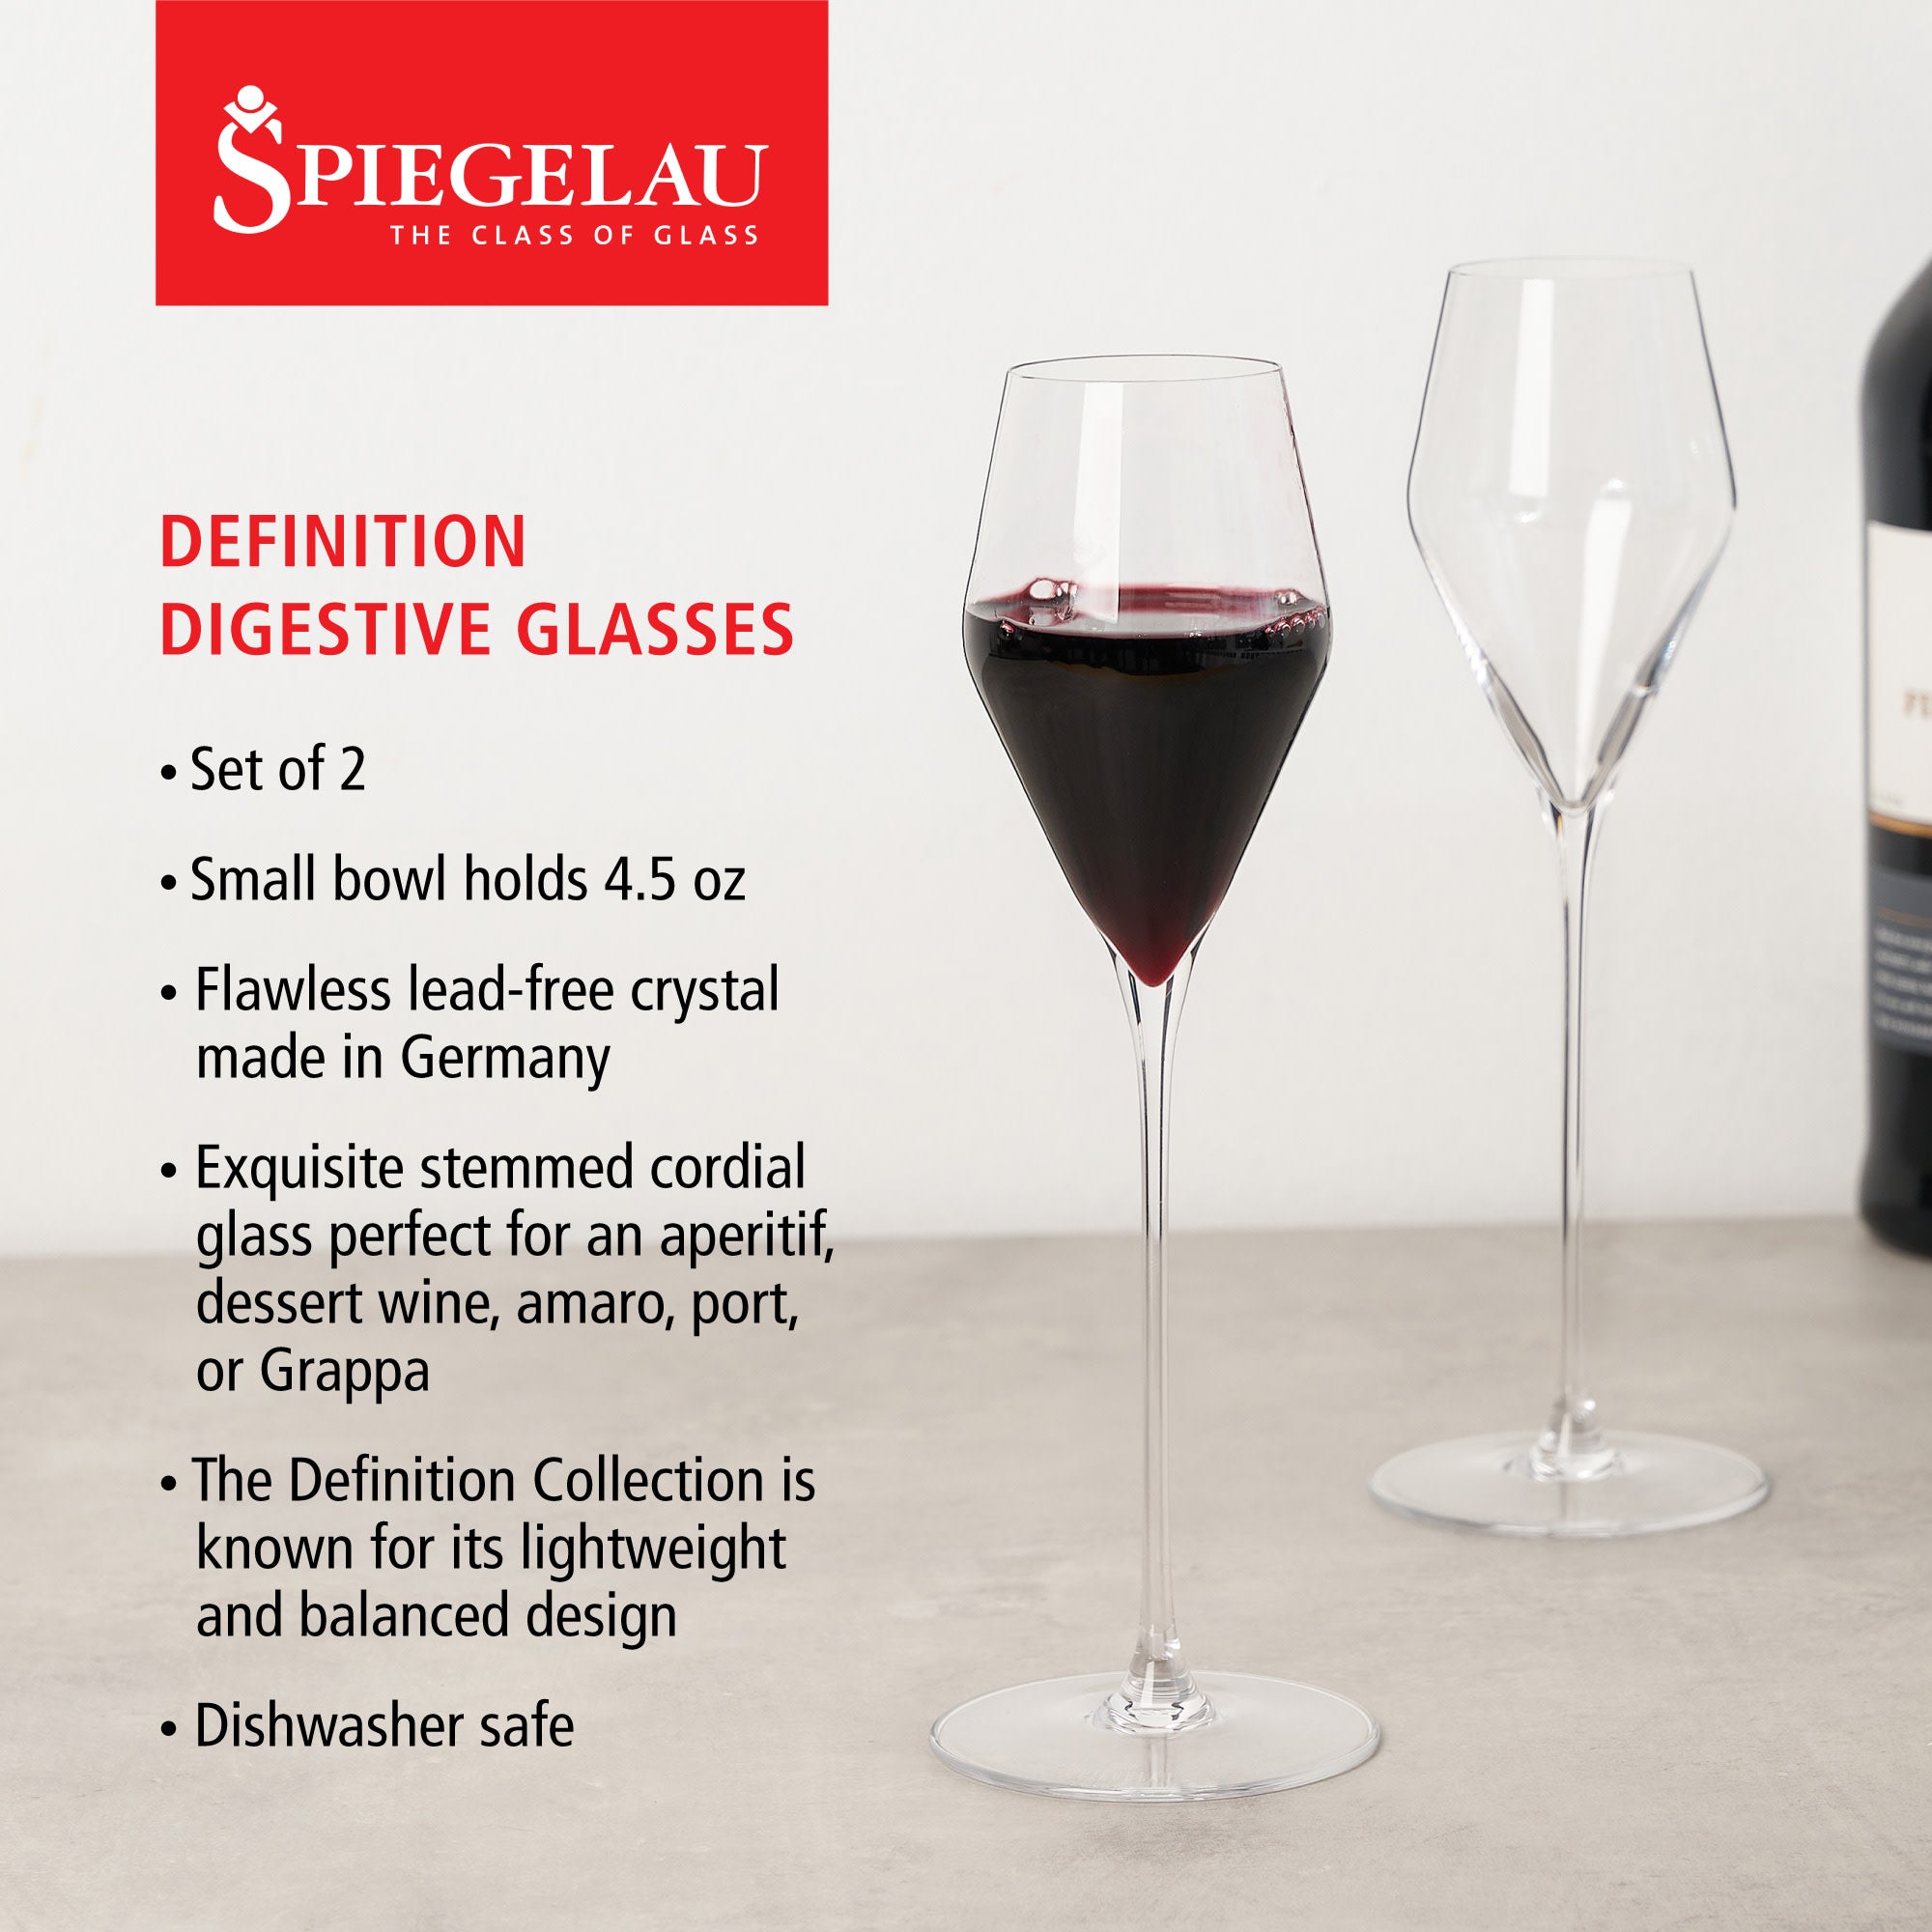 Spiegelau Definition 4.5 oz Digestive Glass, set of 2 (1350166)